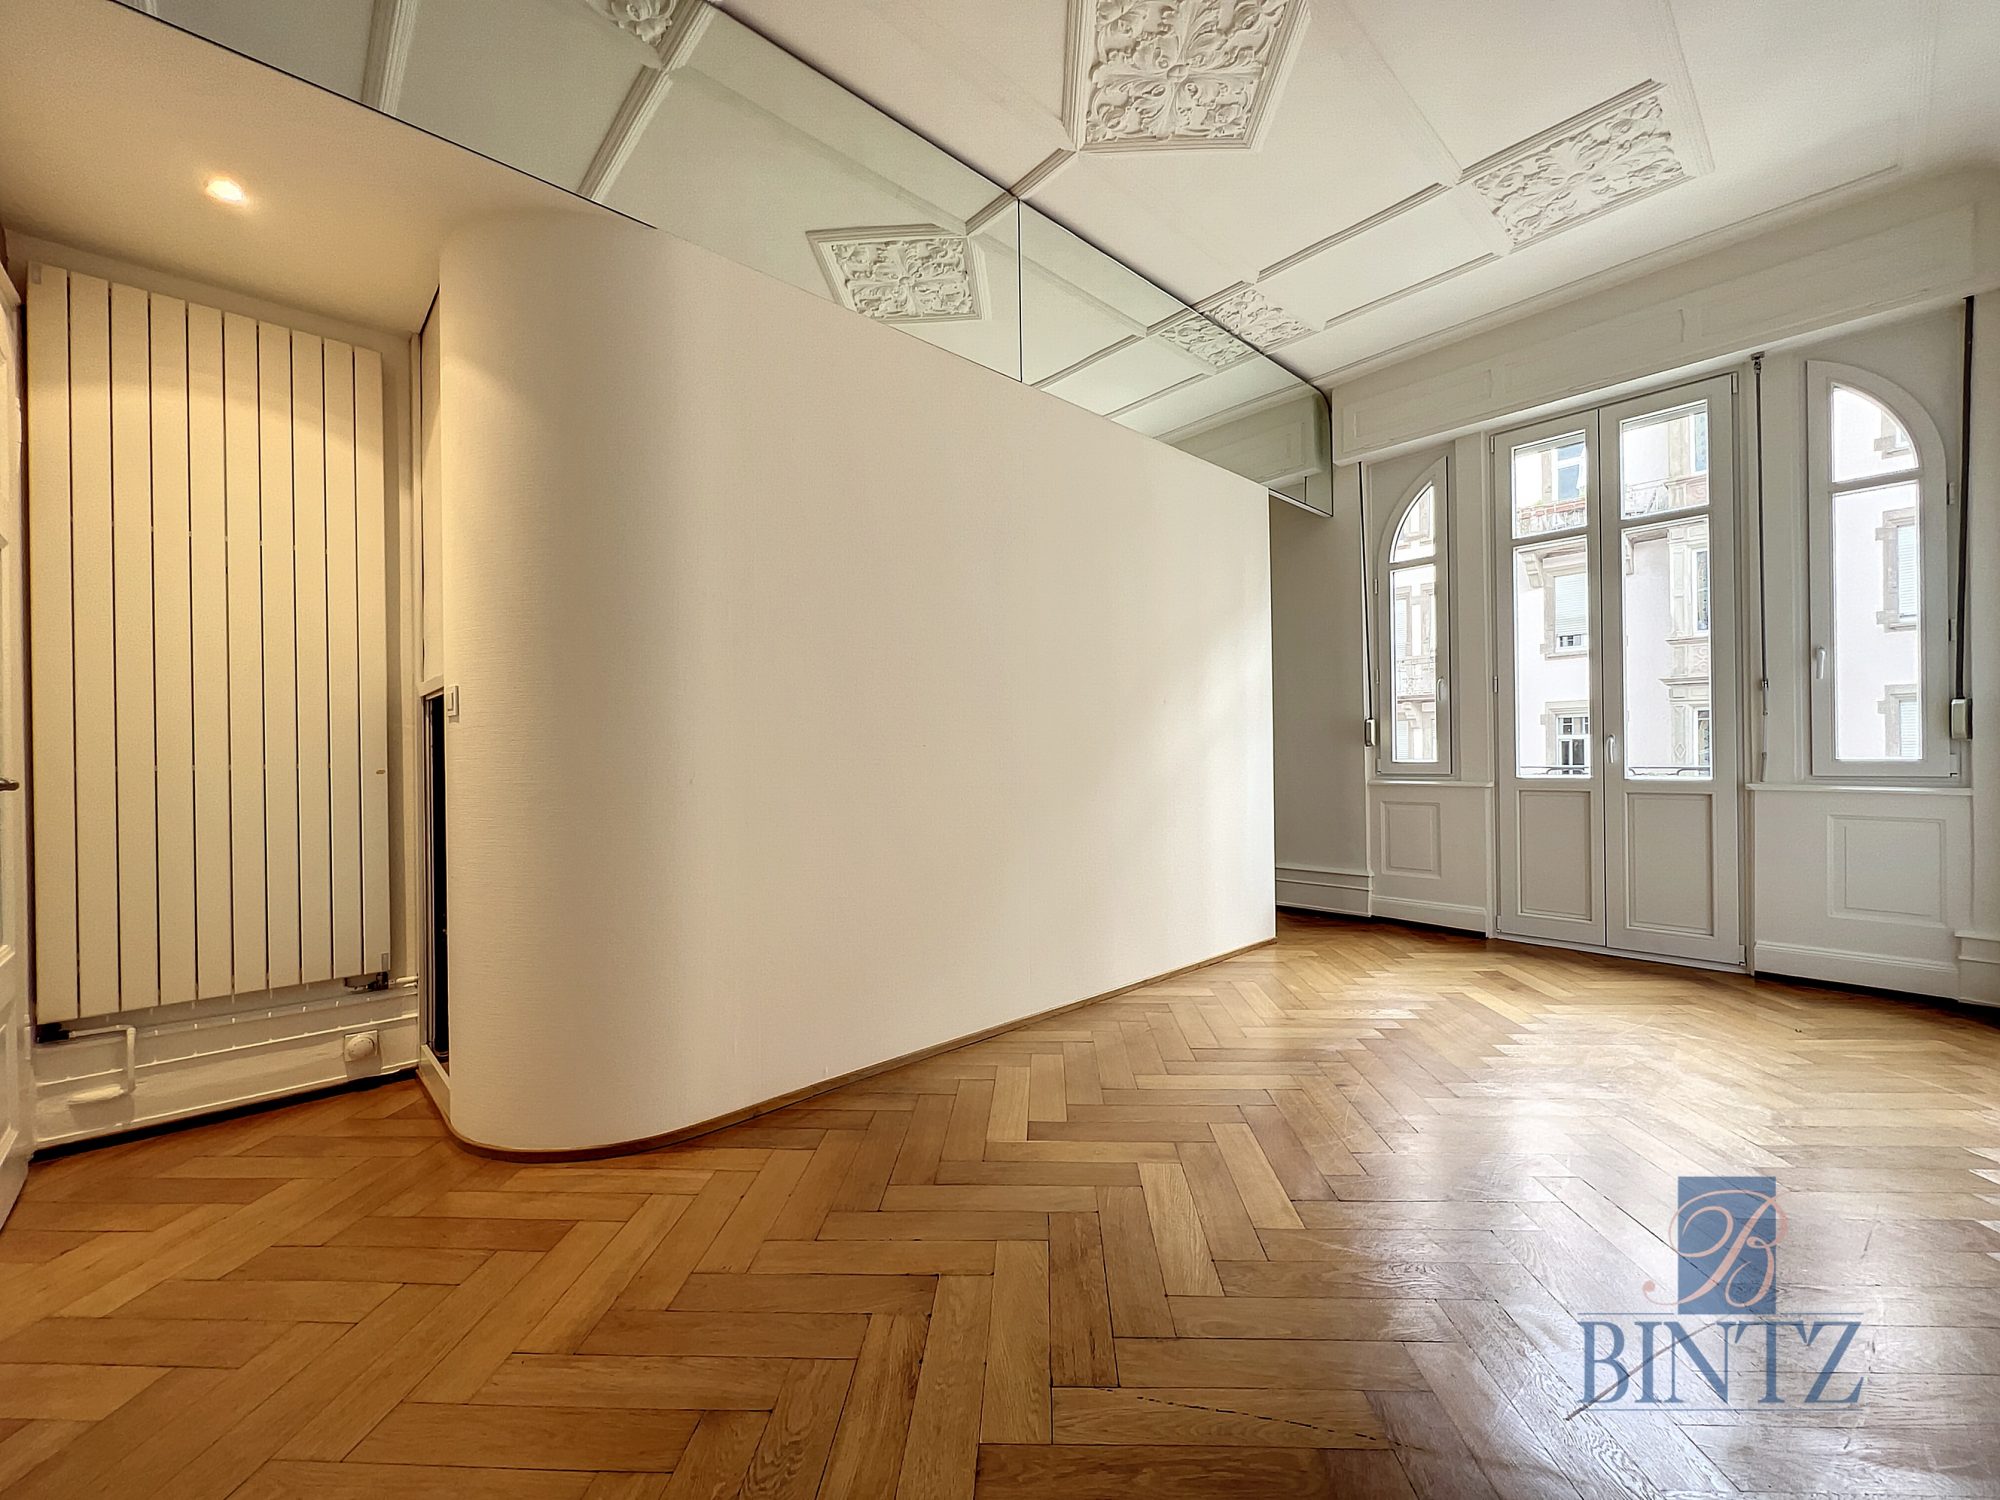 4 pièces avec terrasse - achat appartement Strasbourg - Bintz Immobilier - 10